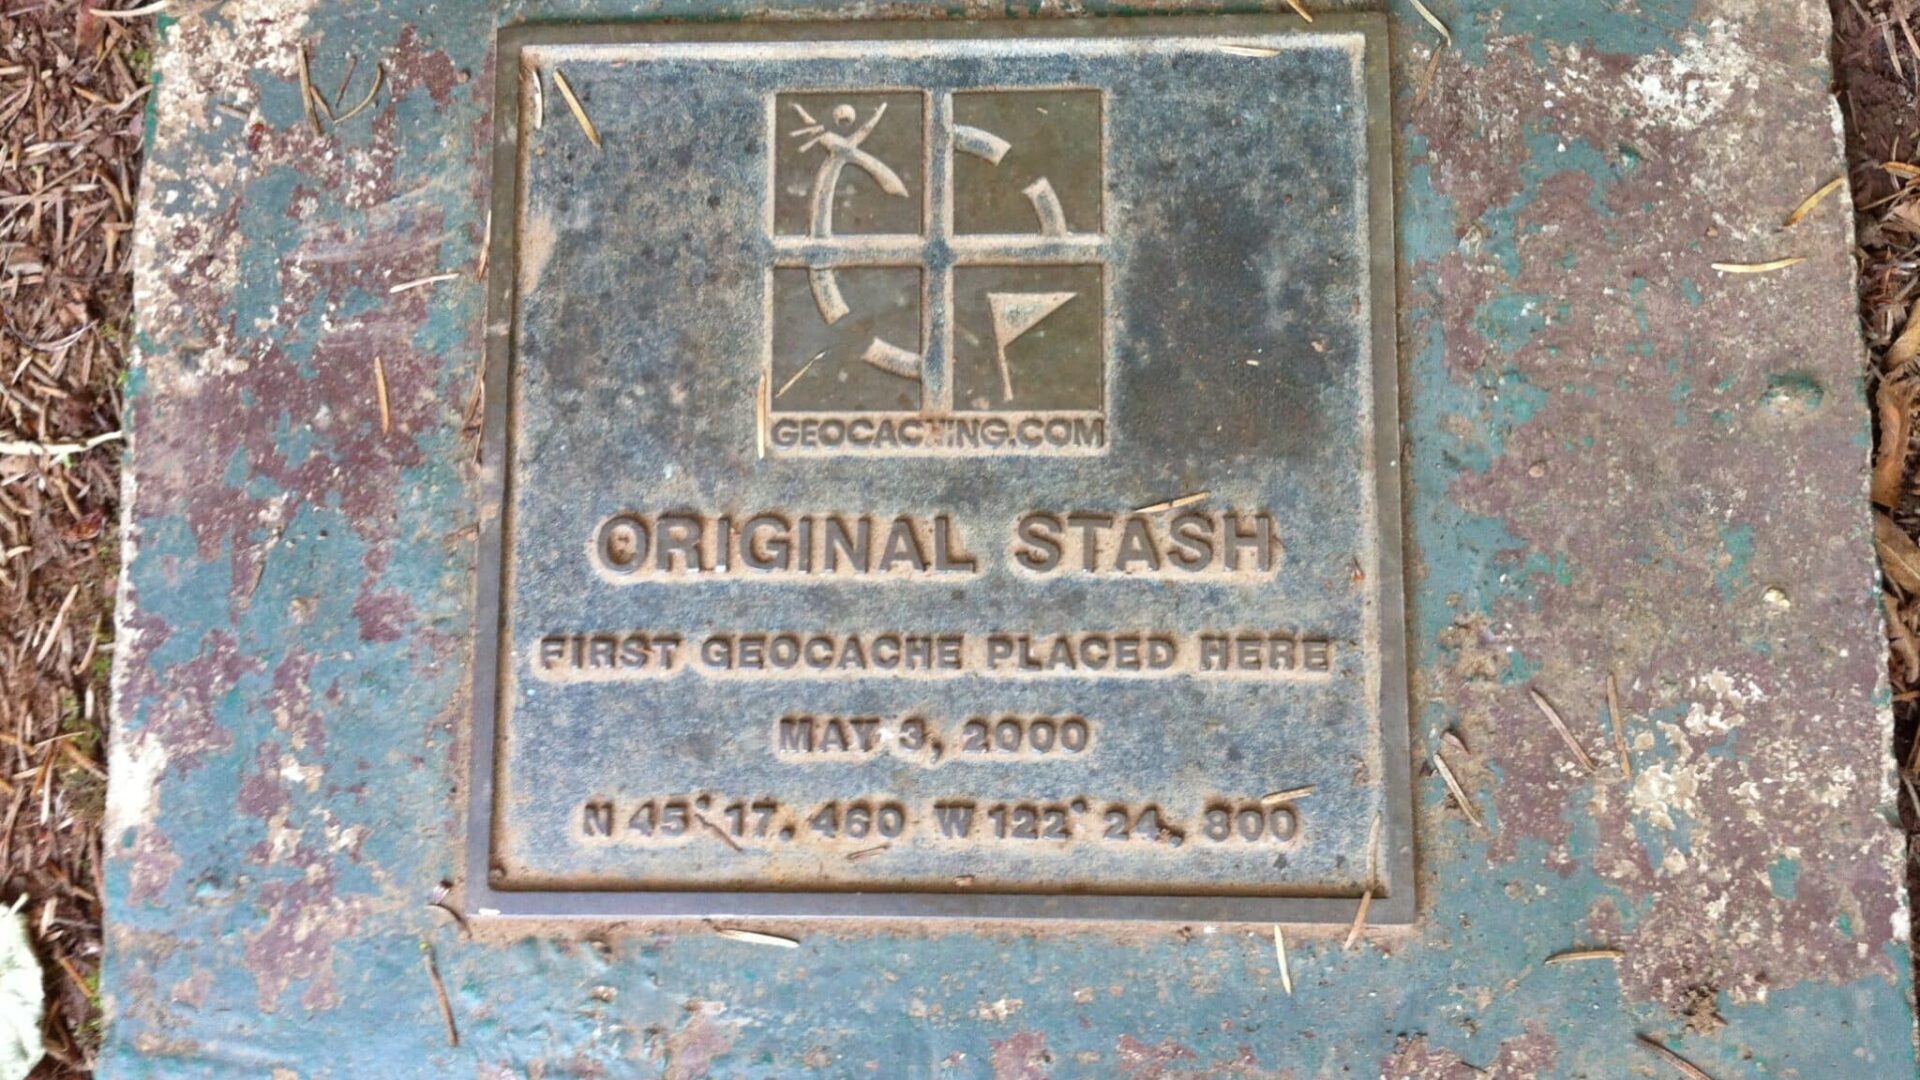 The Original Geocache plaque